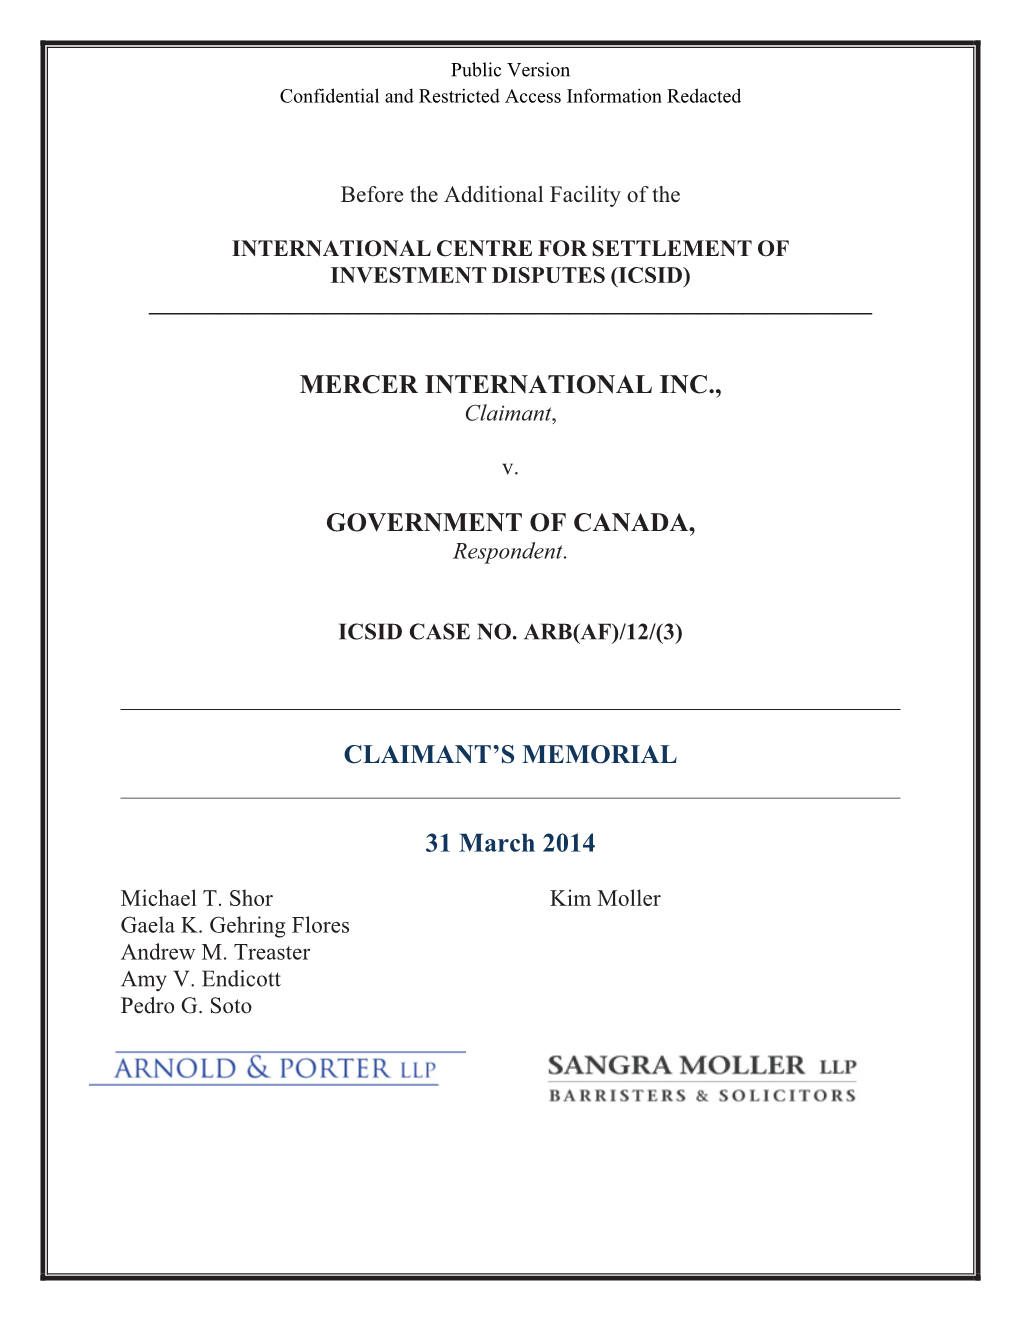 Mercer International Inc., Government of Canada